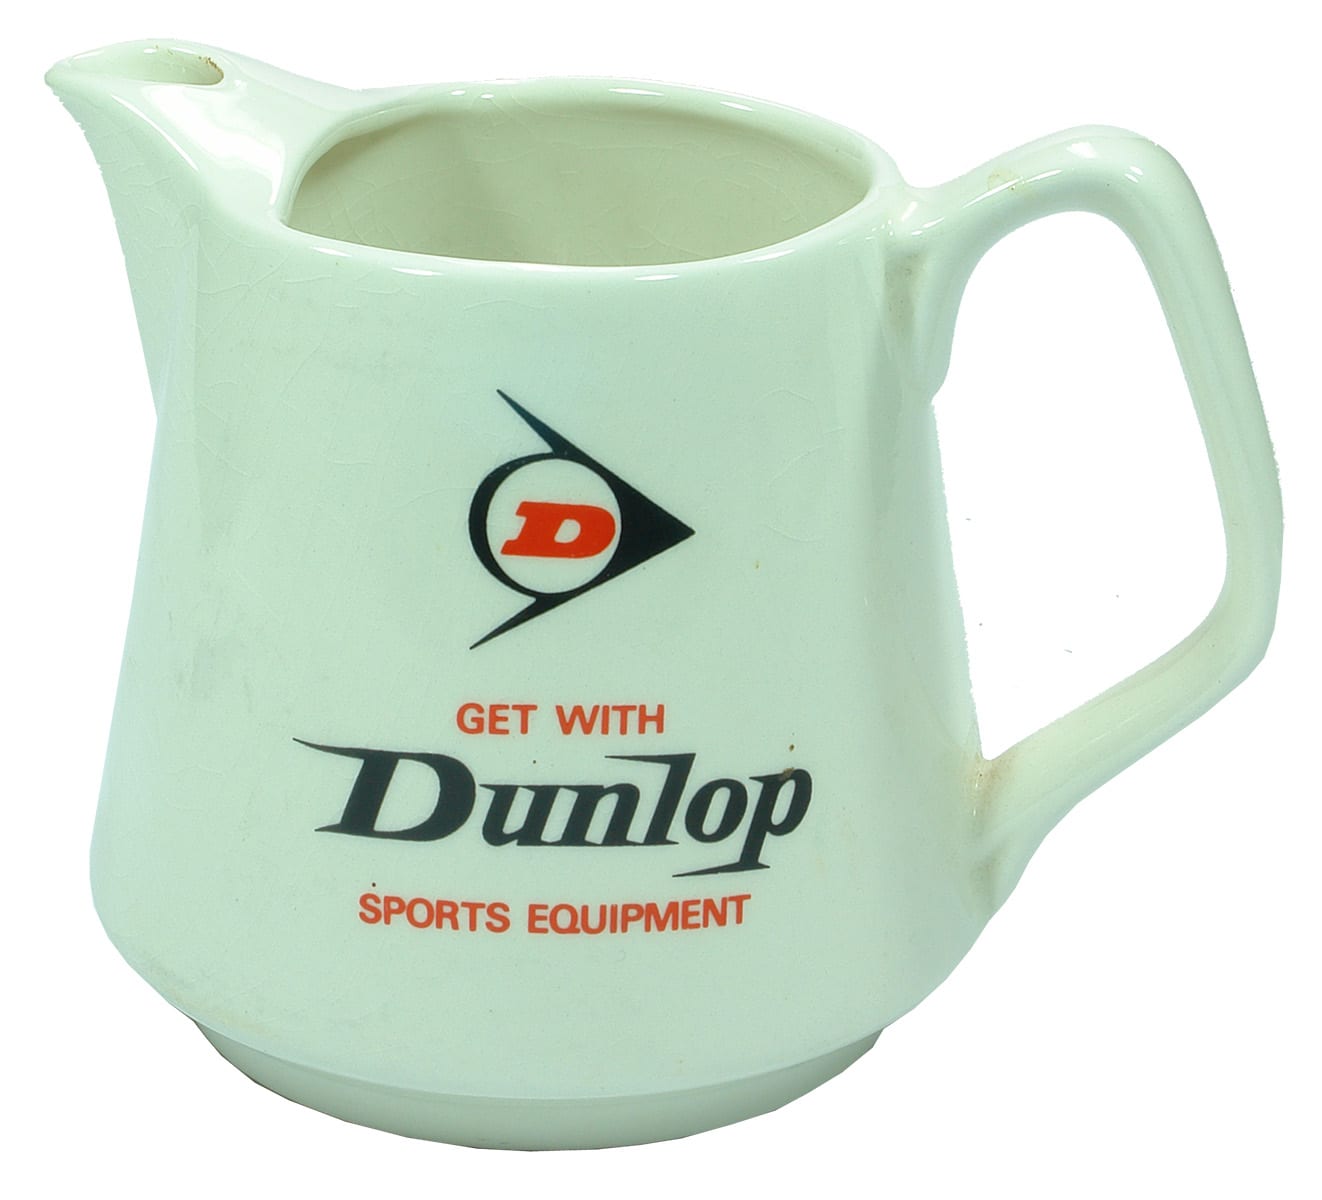 Dunlop Sports Equipment Advertising Water Jug